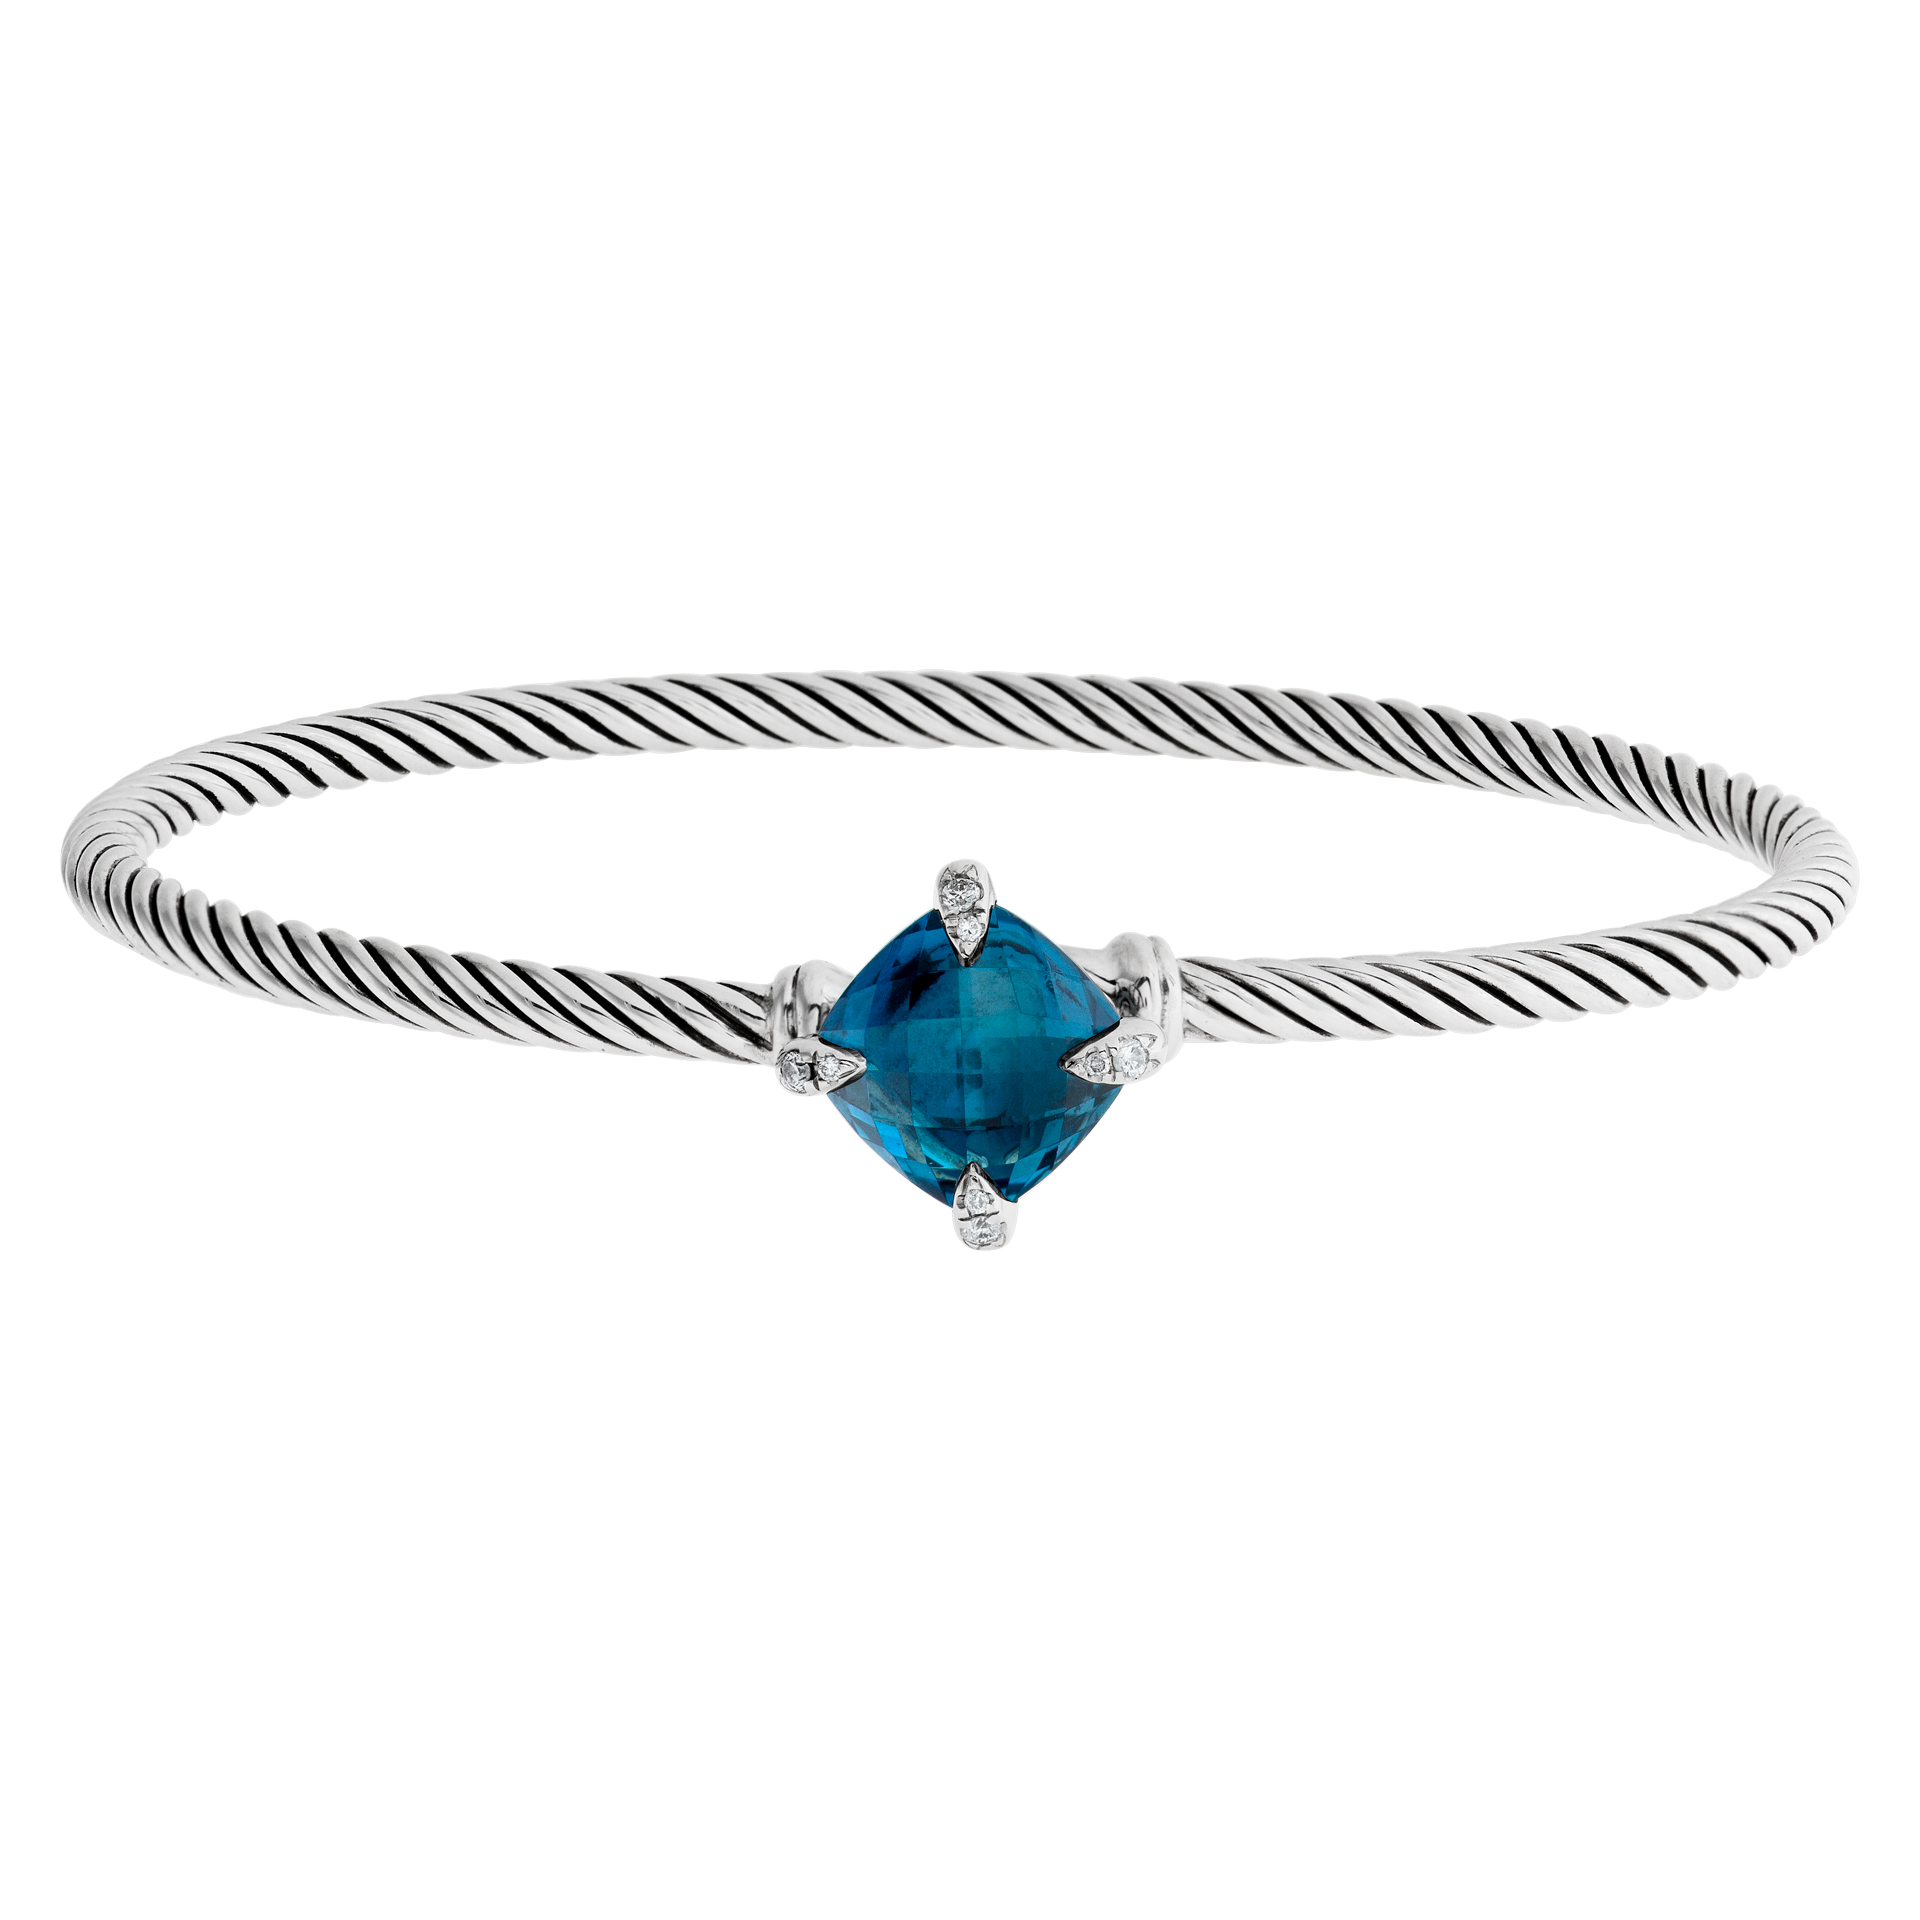 David Yurman "Chatelaine" bangle in sterling silver w/ blue topaz and diamonds prongs.